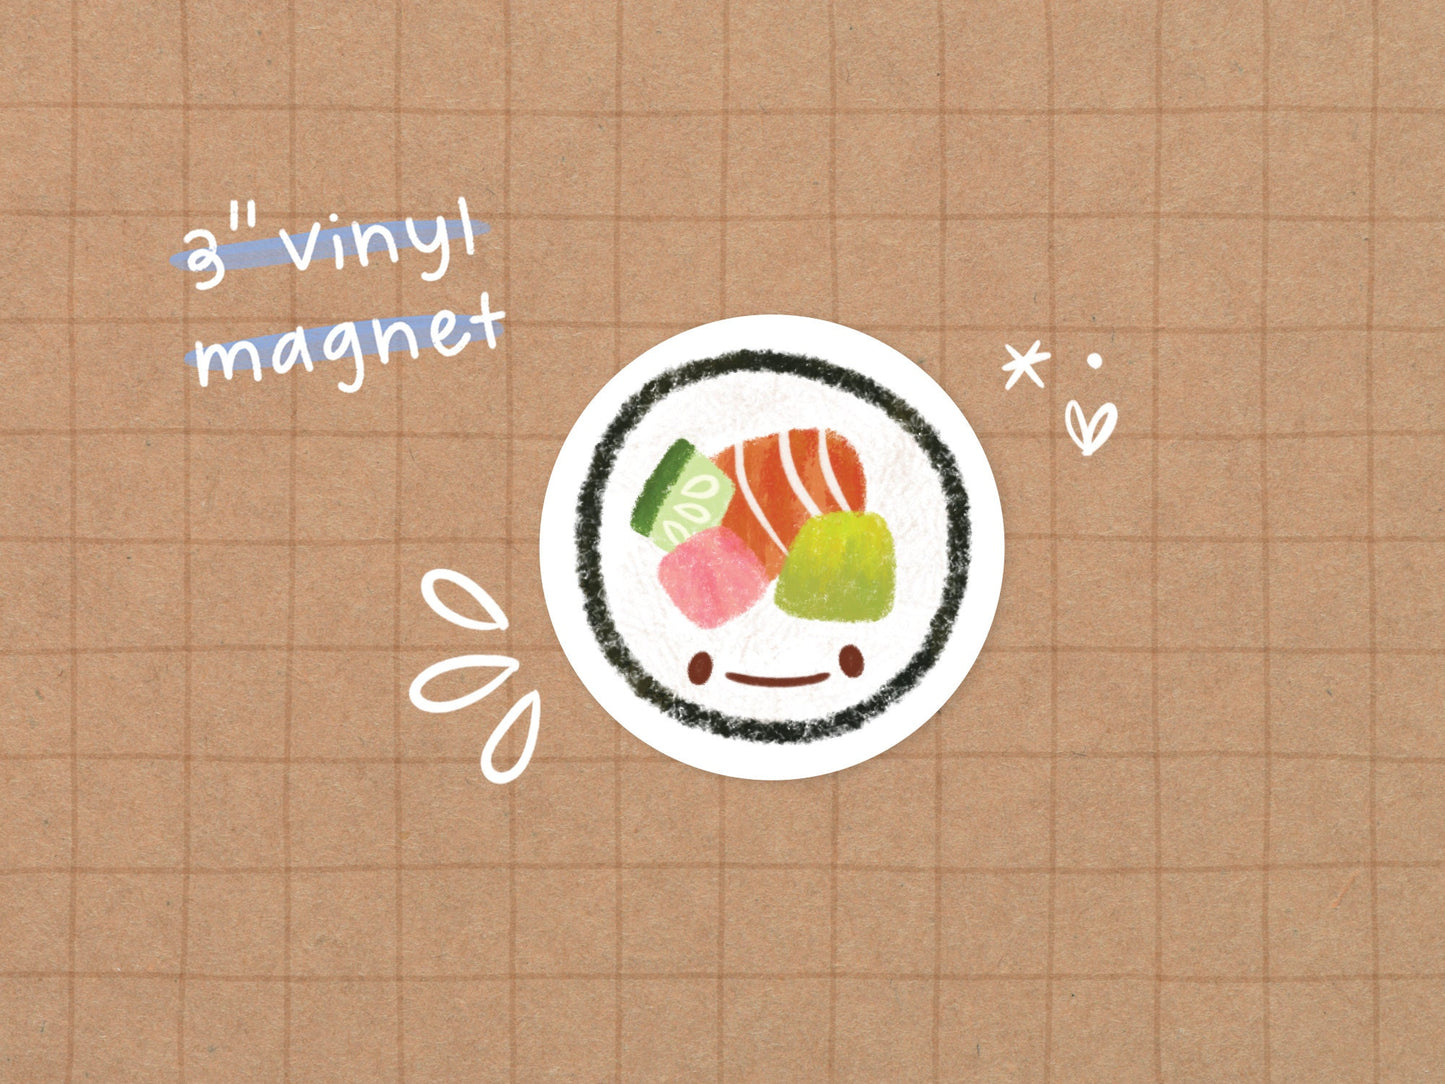 Sushi Vinyl Magnet